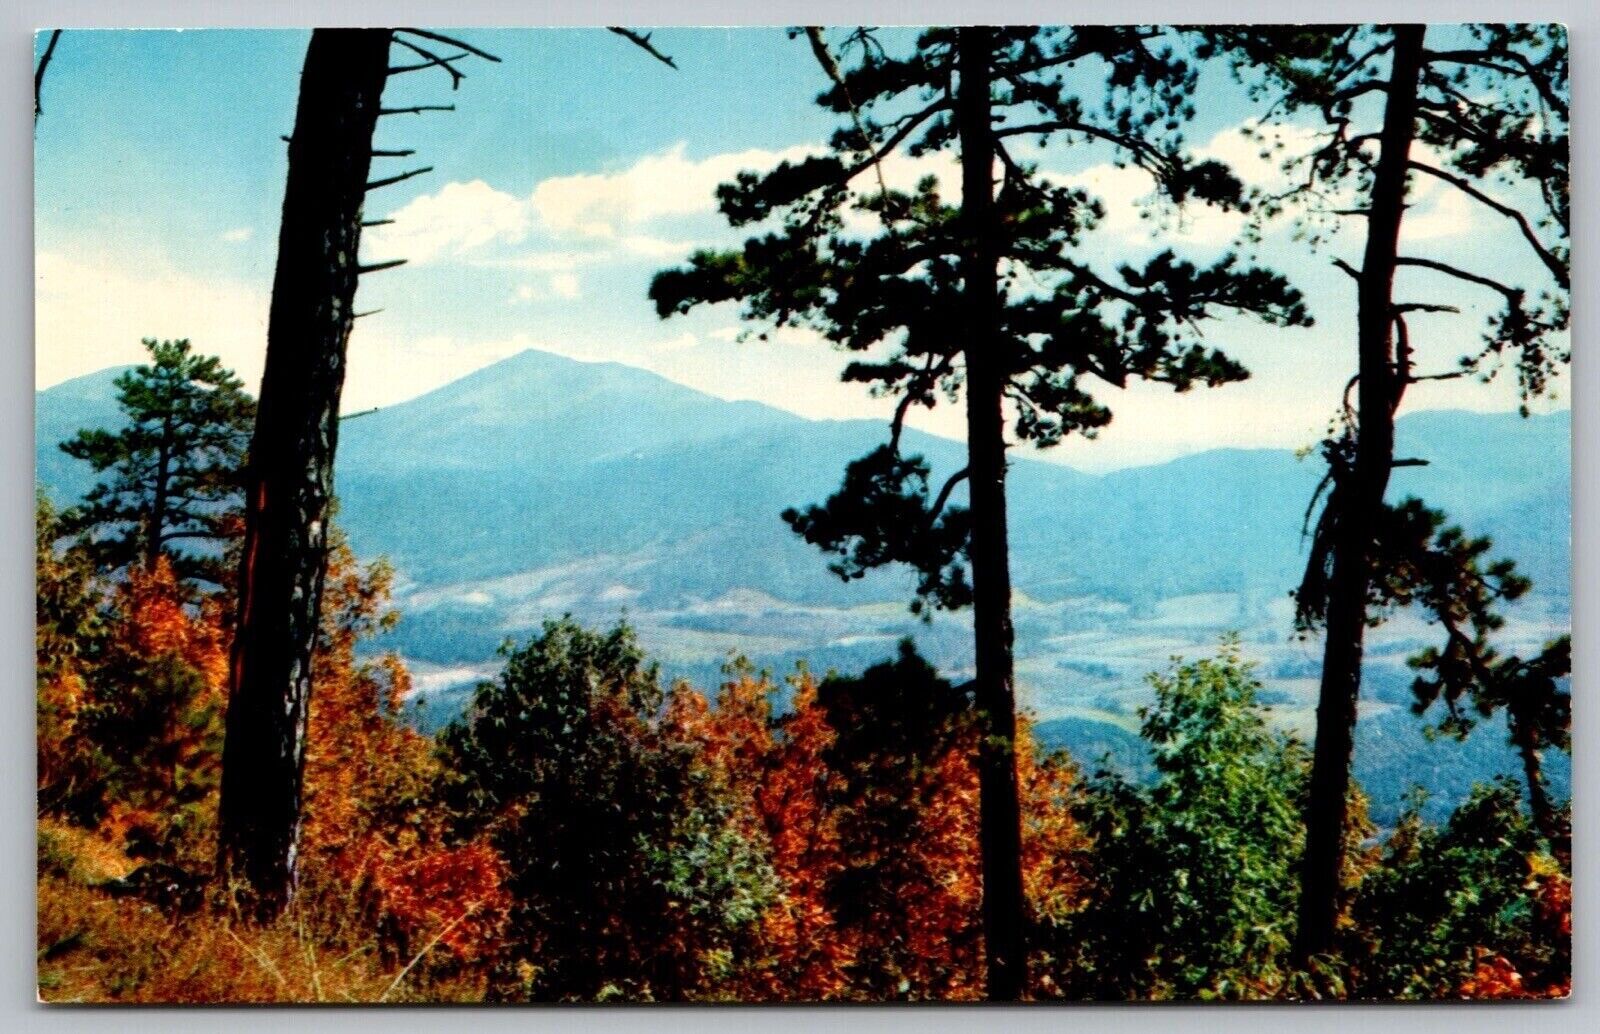 Peaks Otter Blue Ridge Parkway Virginia Recreational Area Sharp Top VNG Postcard